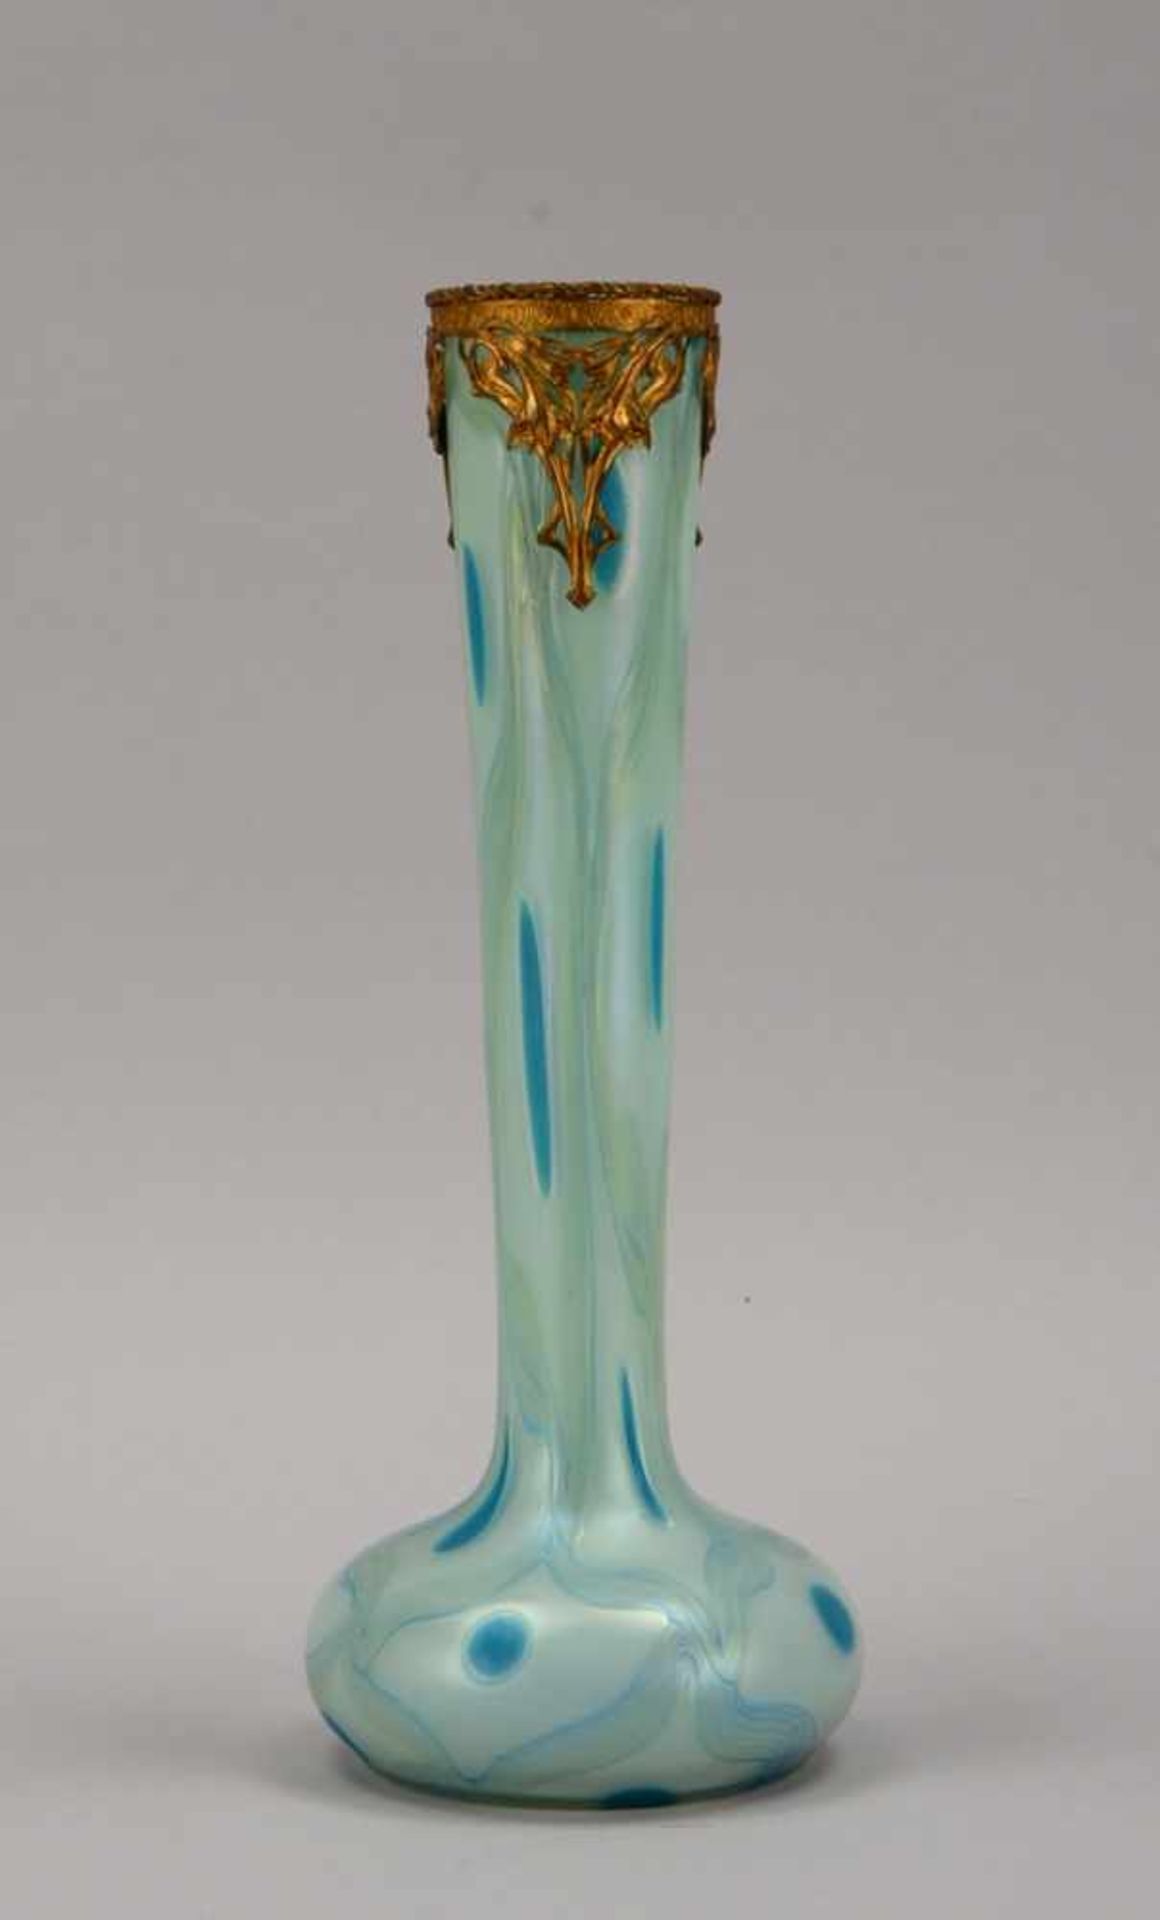 Jugendstil-Langhalsvase (um 1900), klares Glas in zartem hellen Türkis unterfangen, leicht